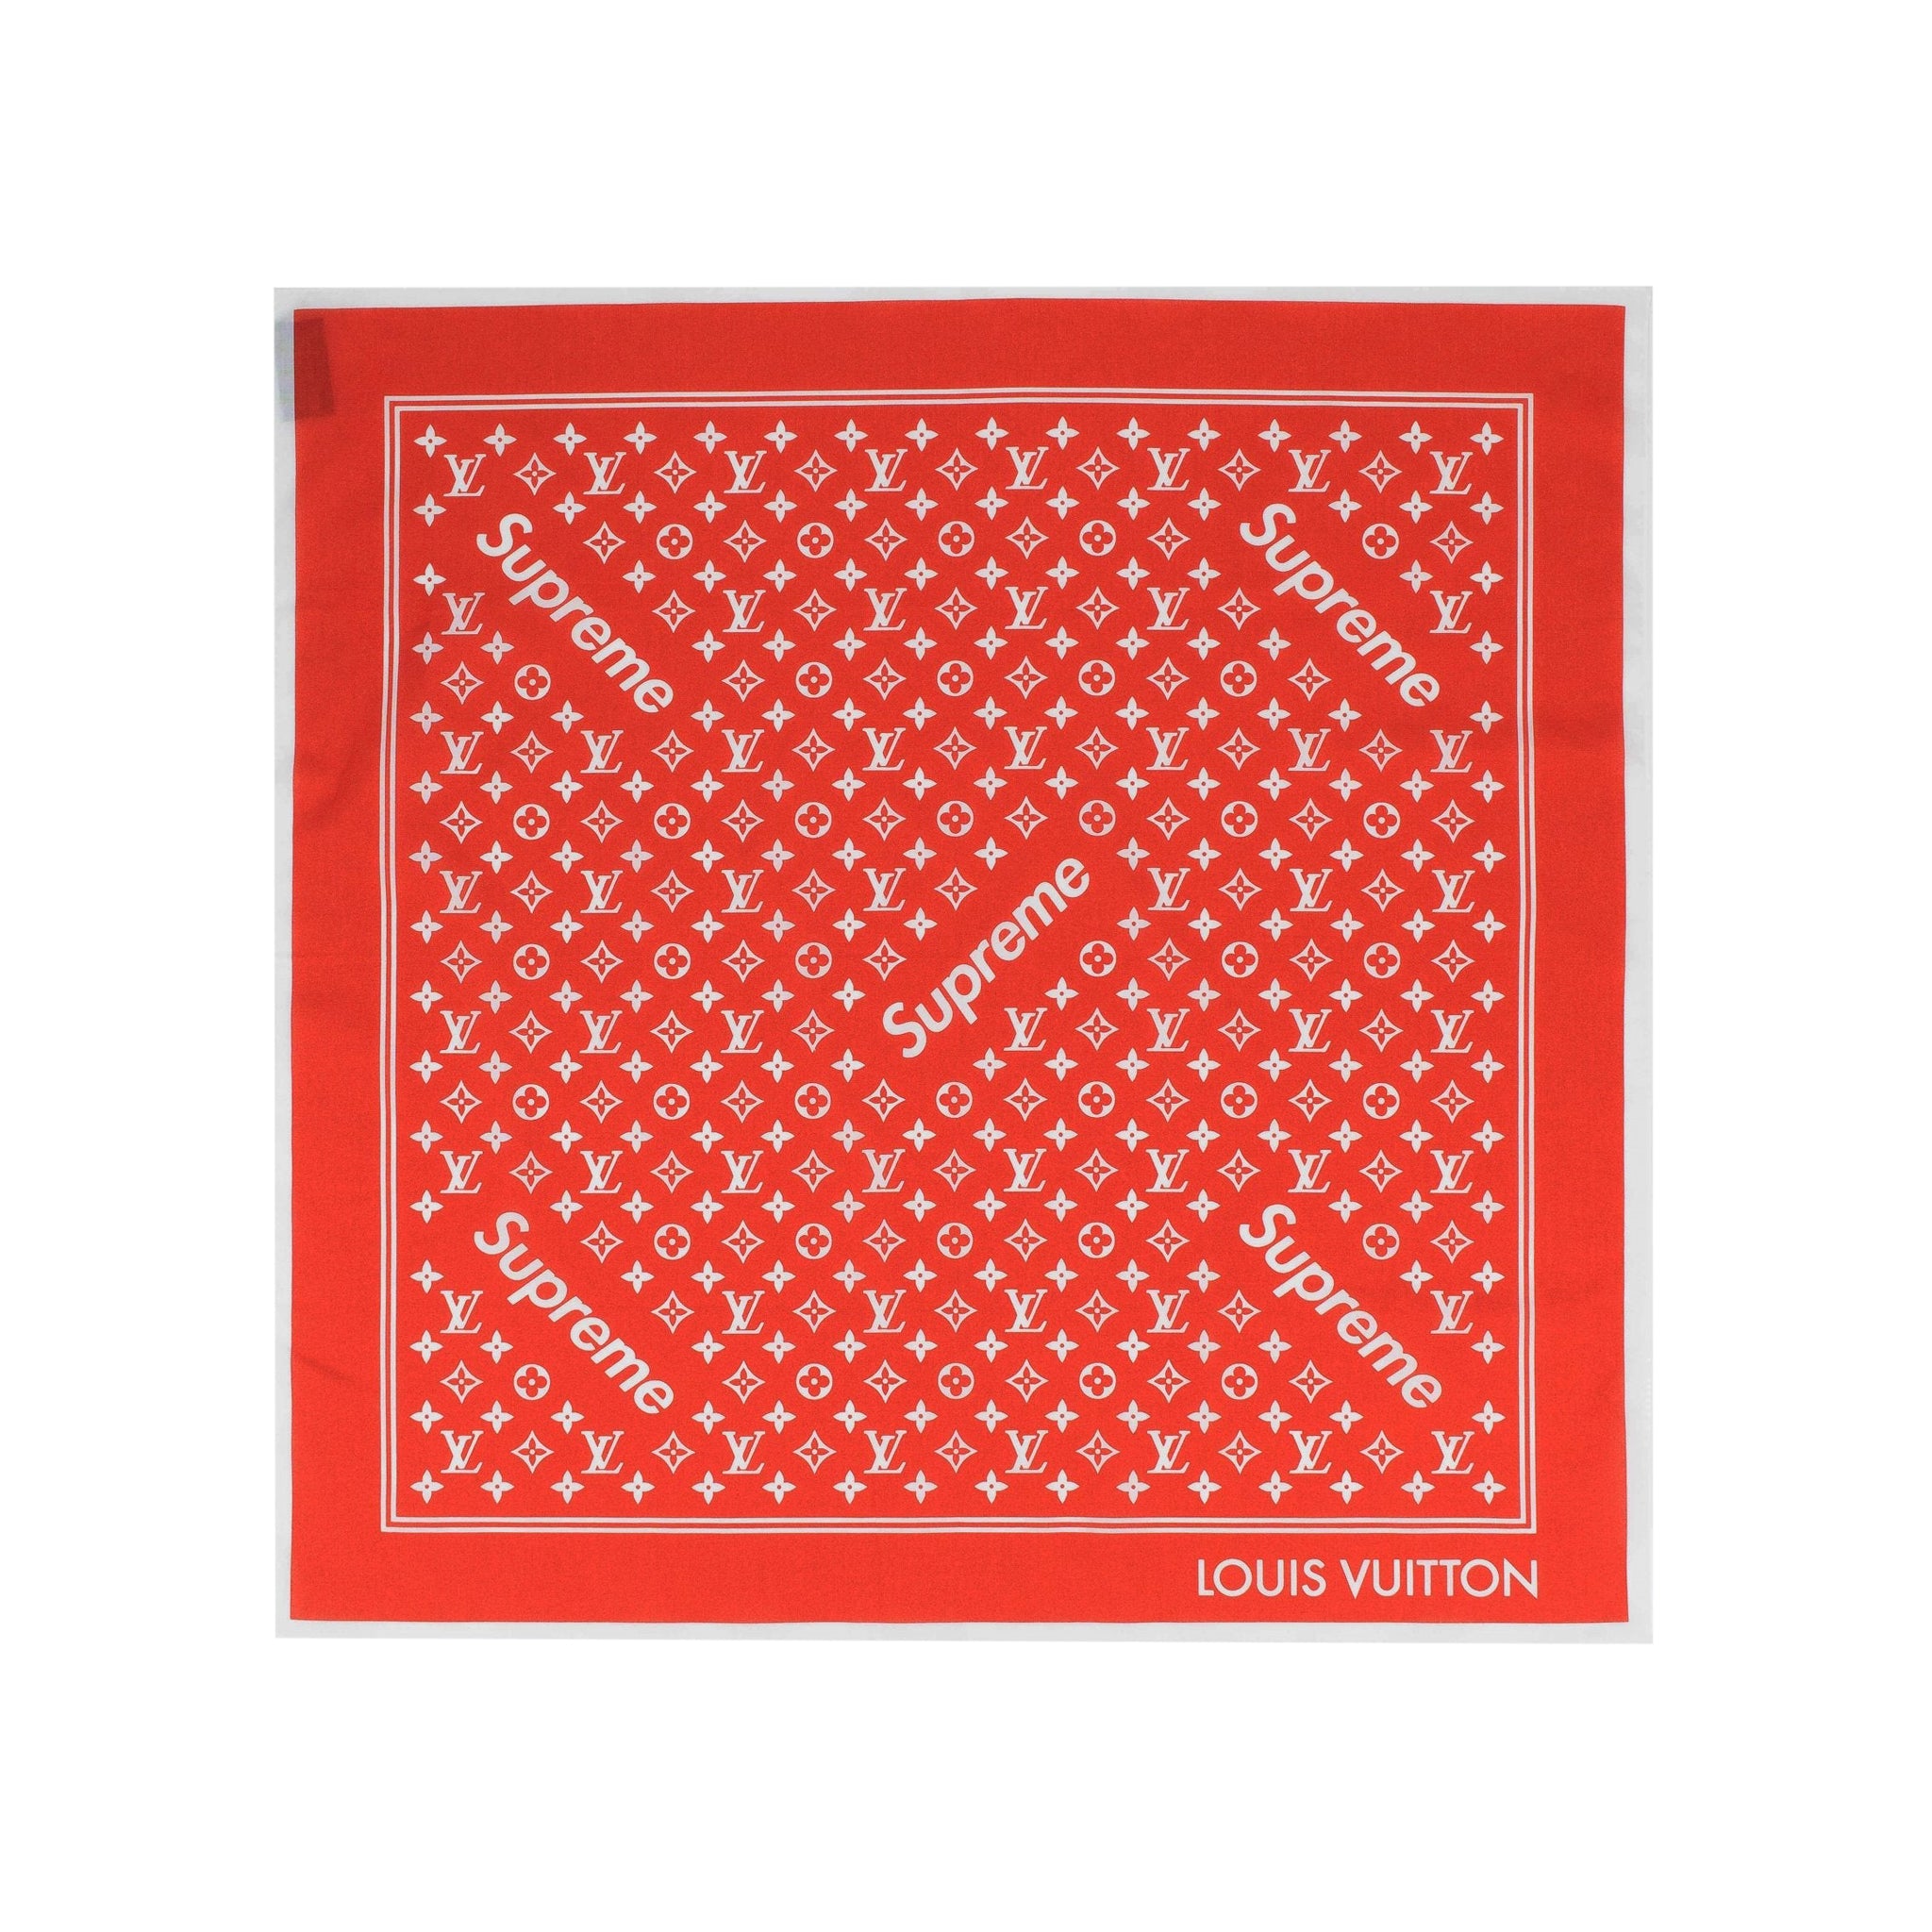 Supreme x Louis Vuitton Monogram Red Bandana – Cheap Willardmarine Jordan  outlet